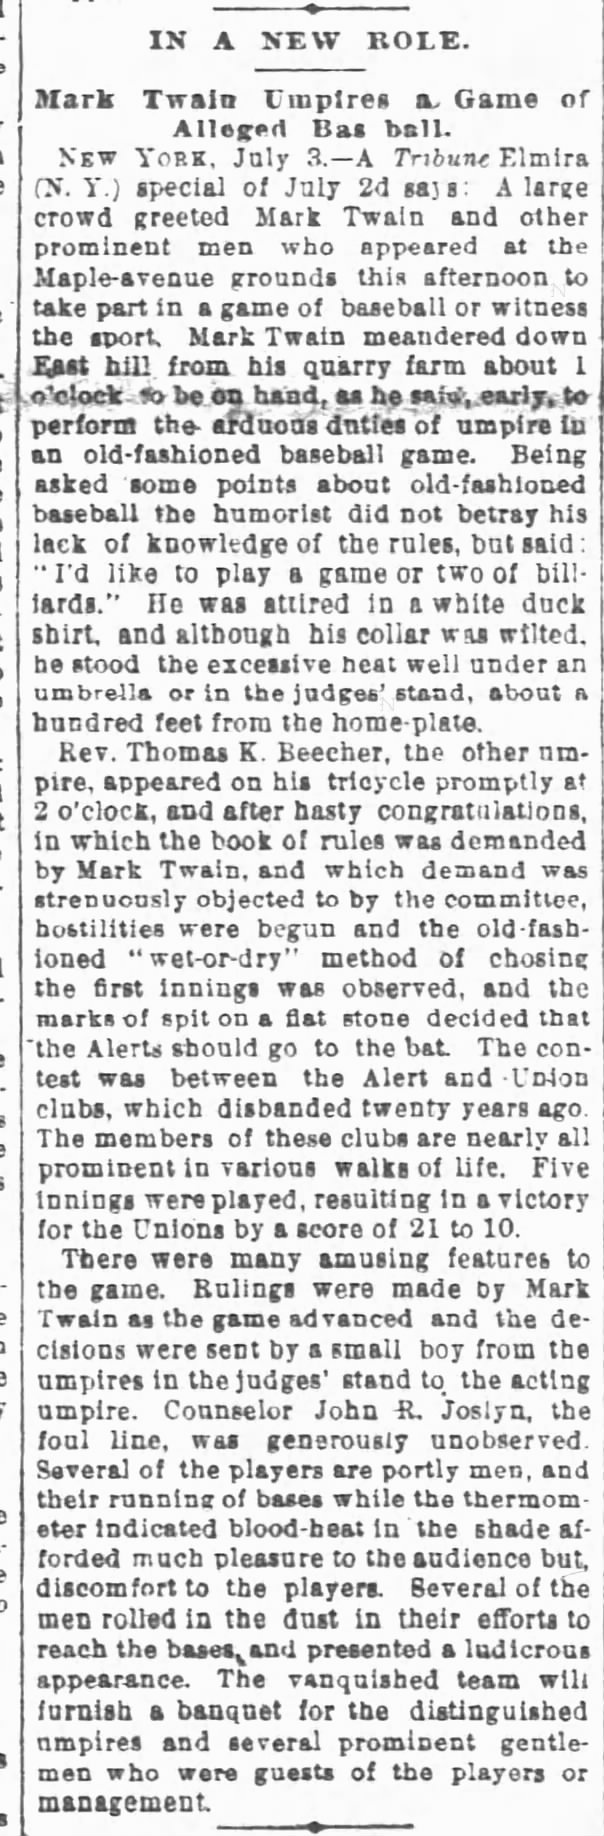 Newspaper account of Mark Twain umpiring a baseball game in New York in 1887